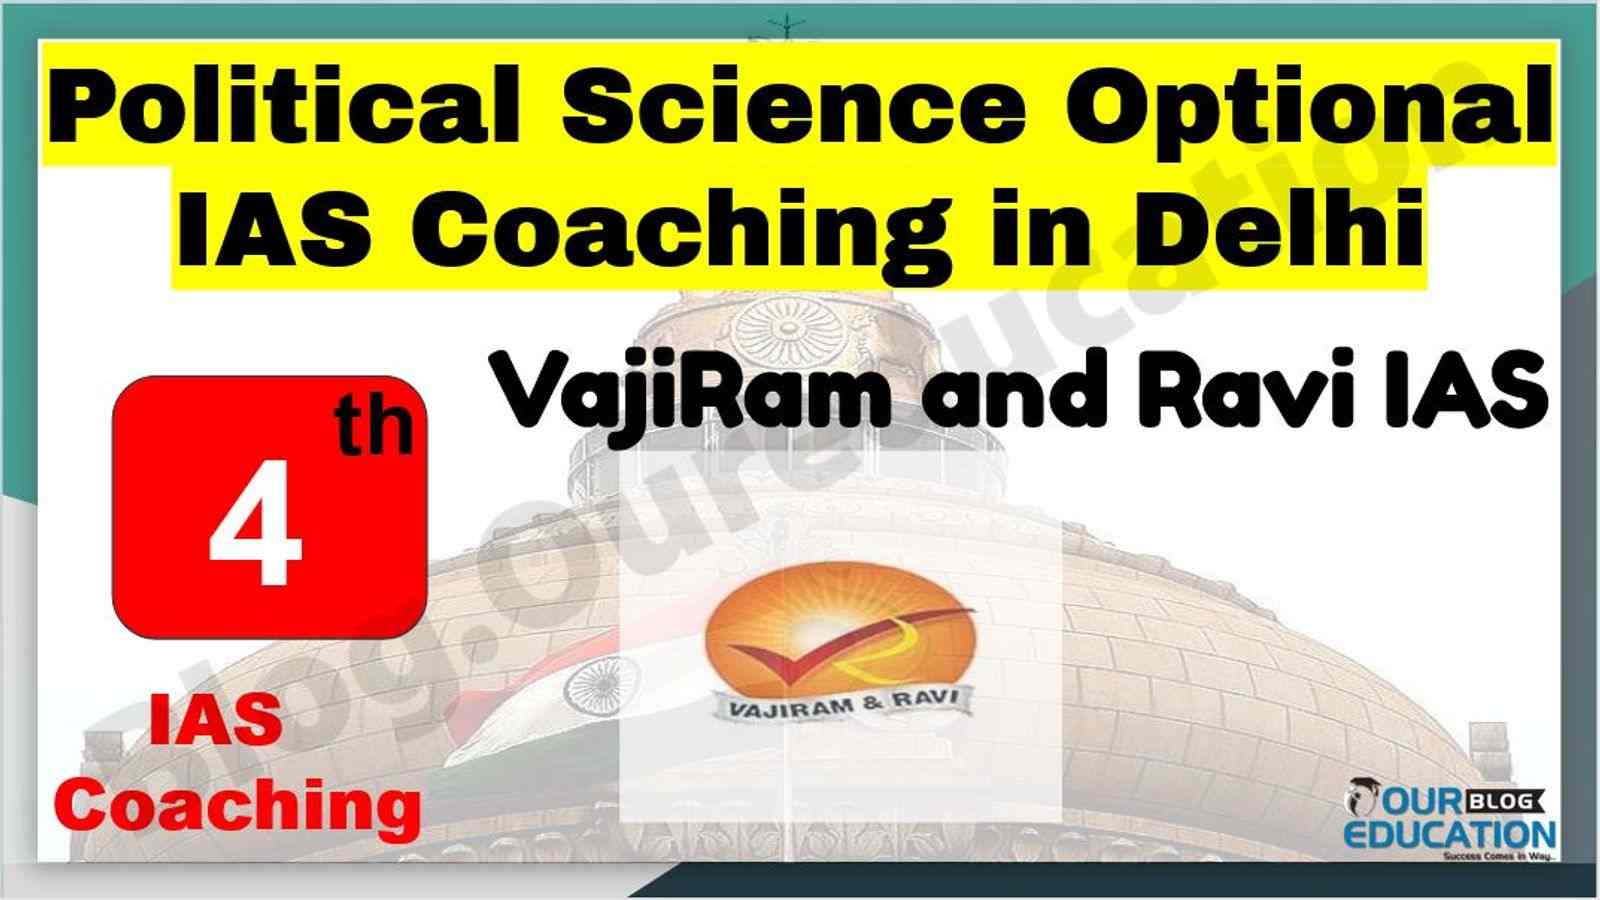 Political Science Optional IAS coaching in Delhi